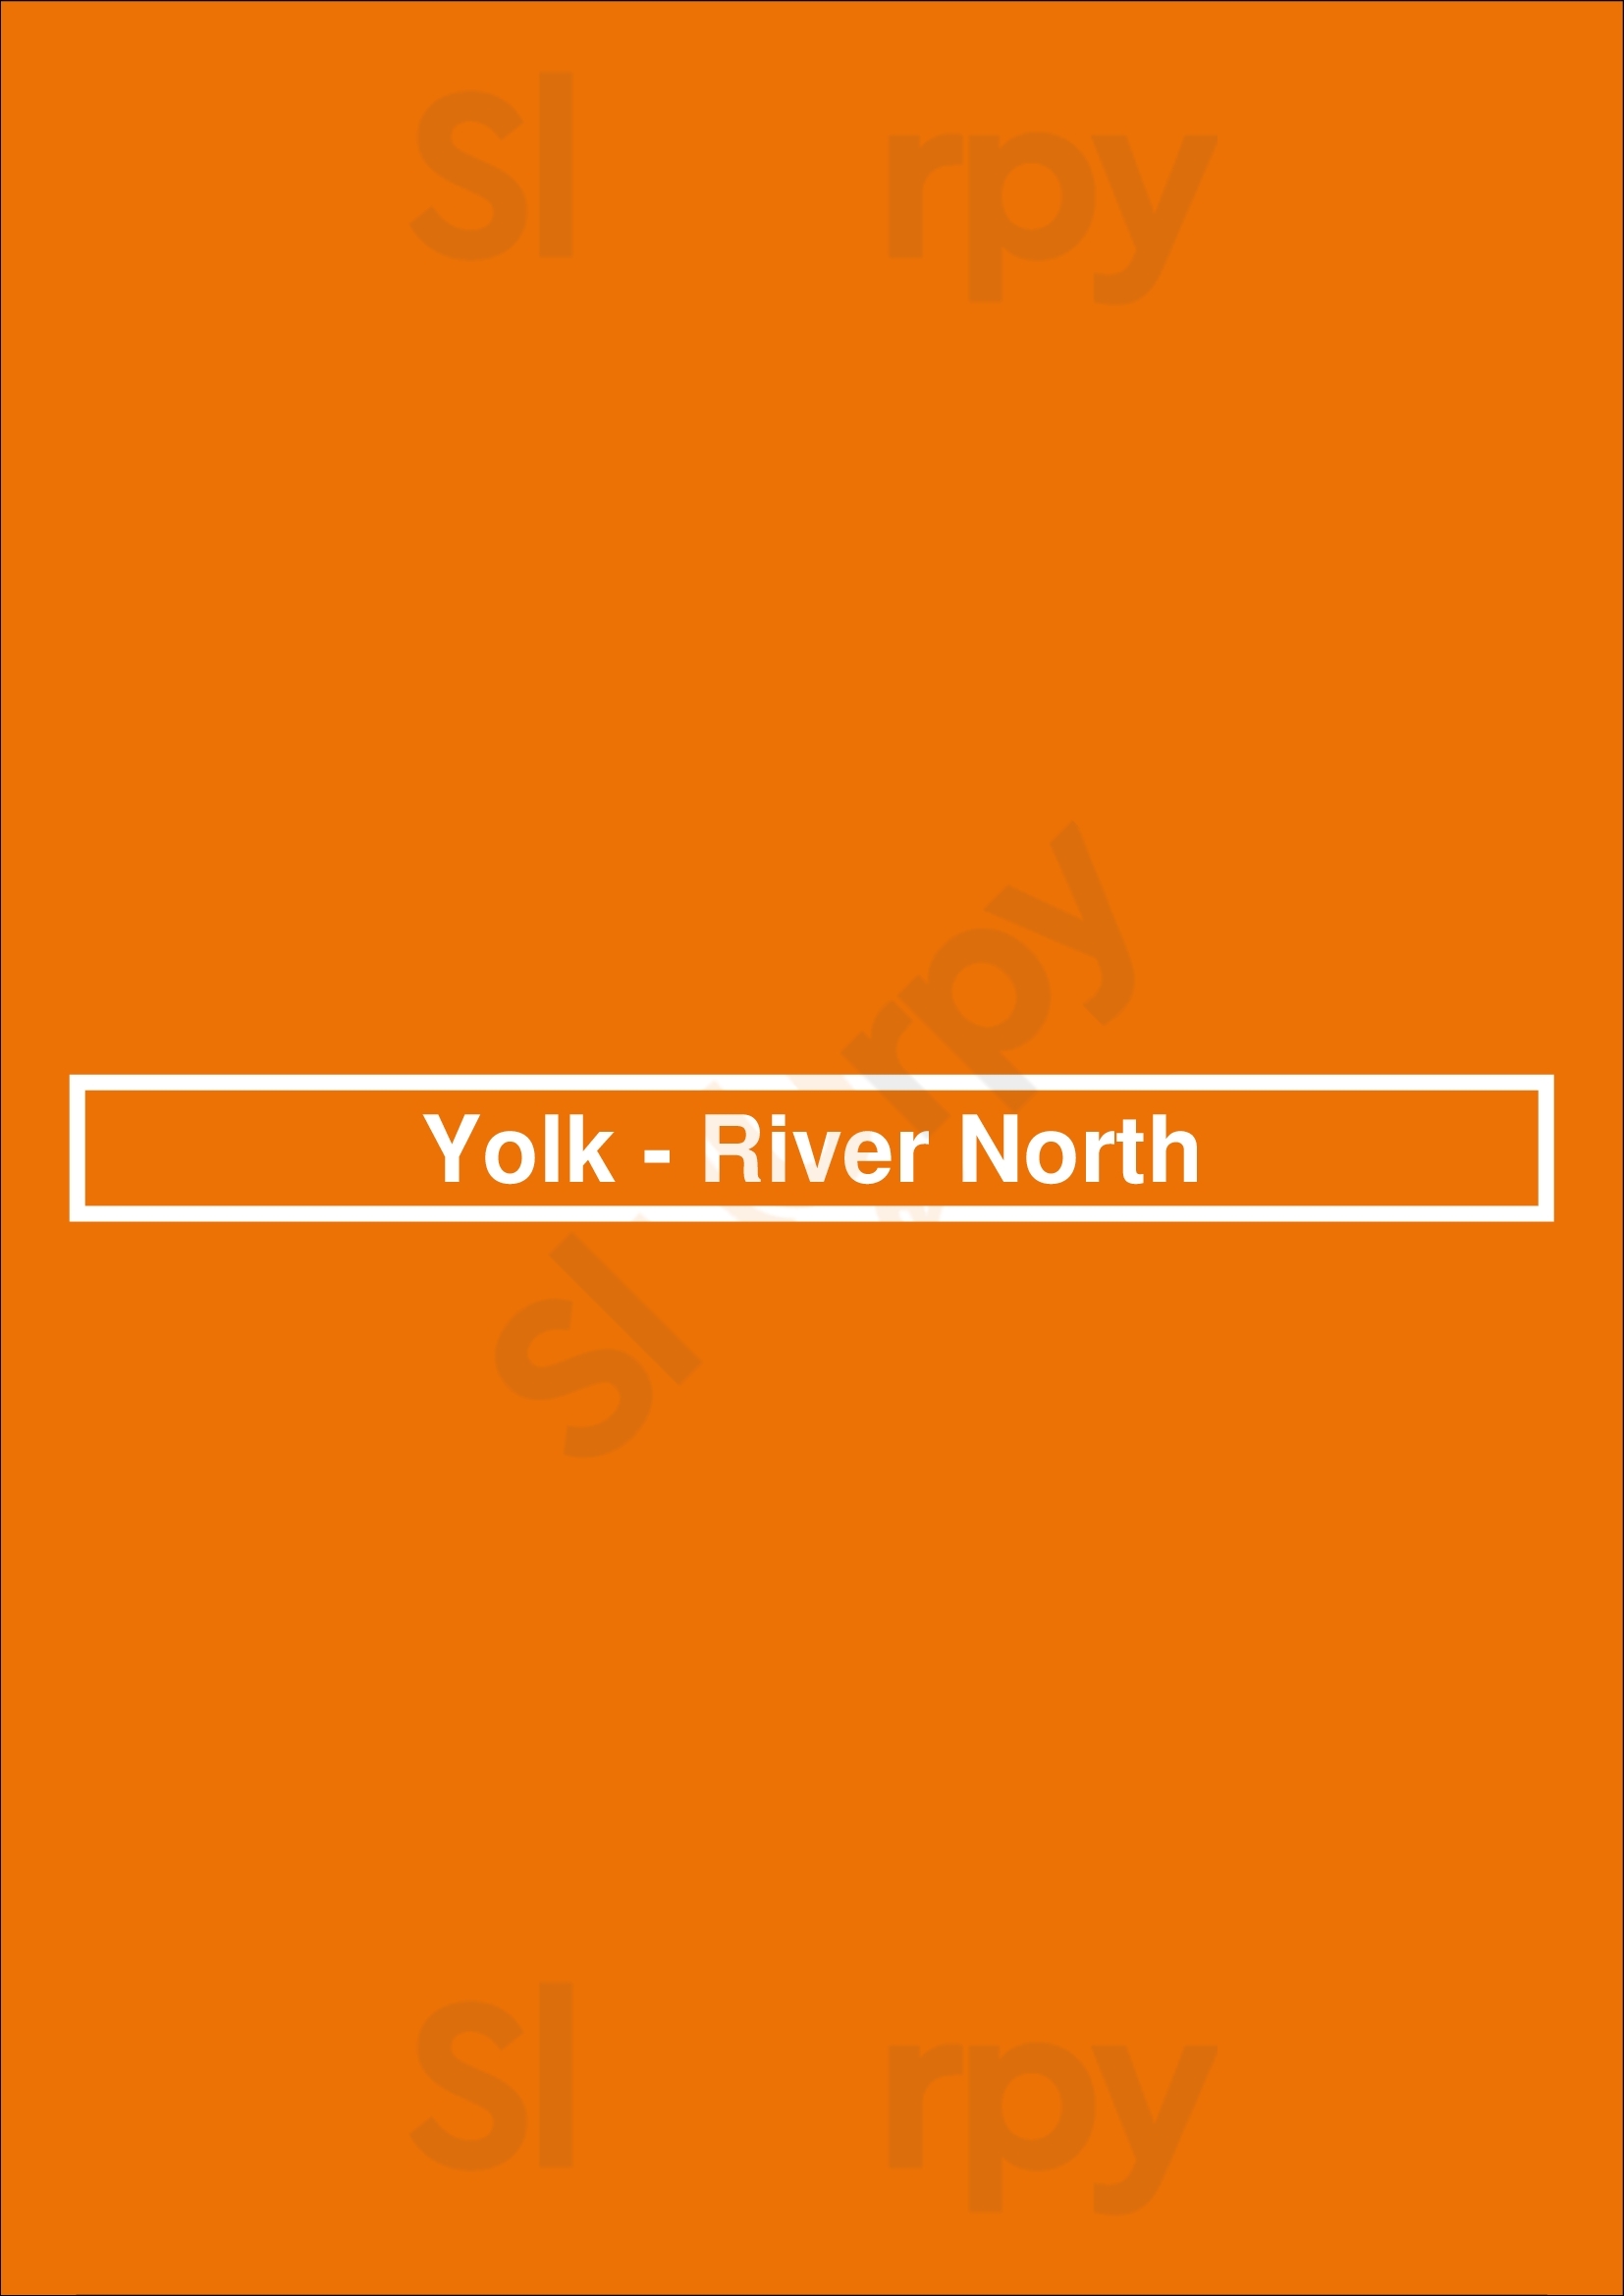 Yolk - River North Chicago Menu - 1